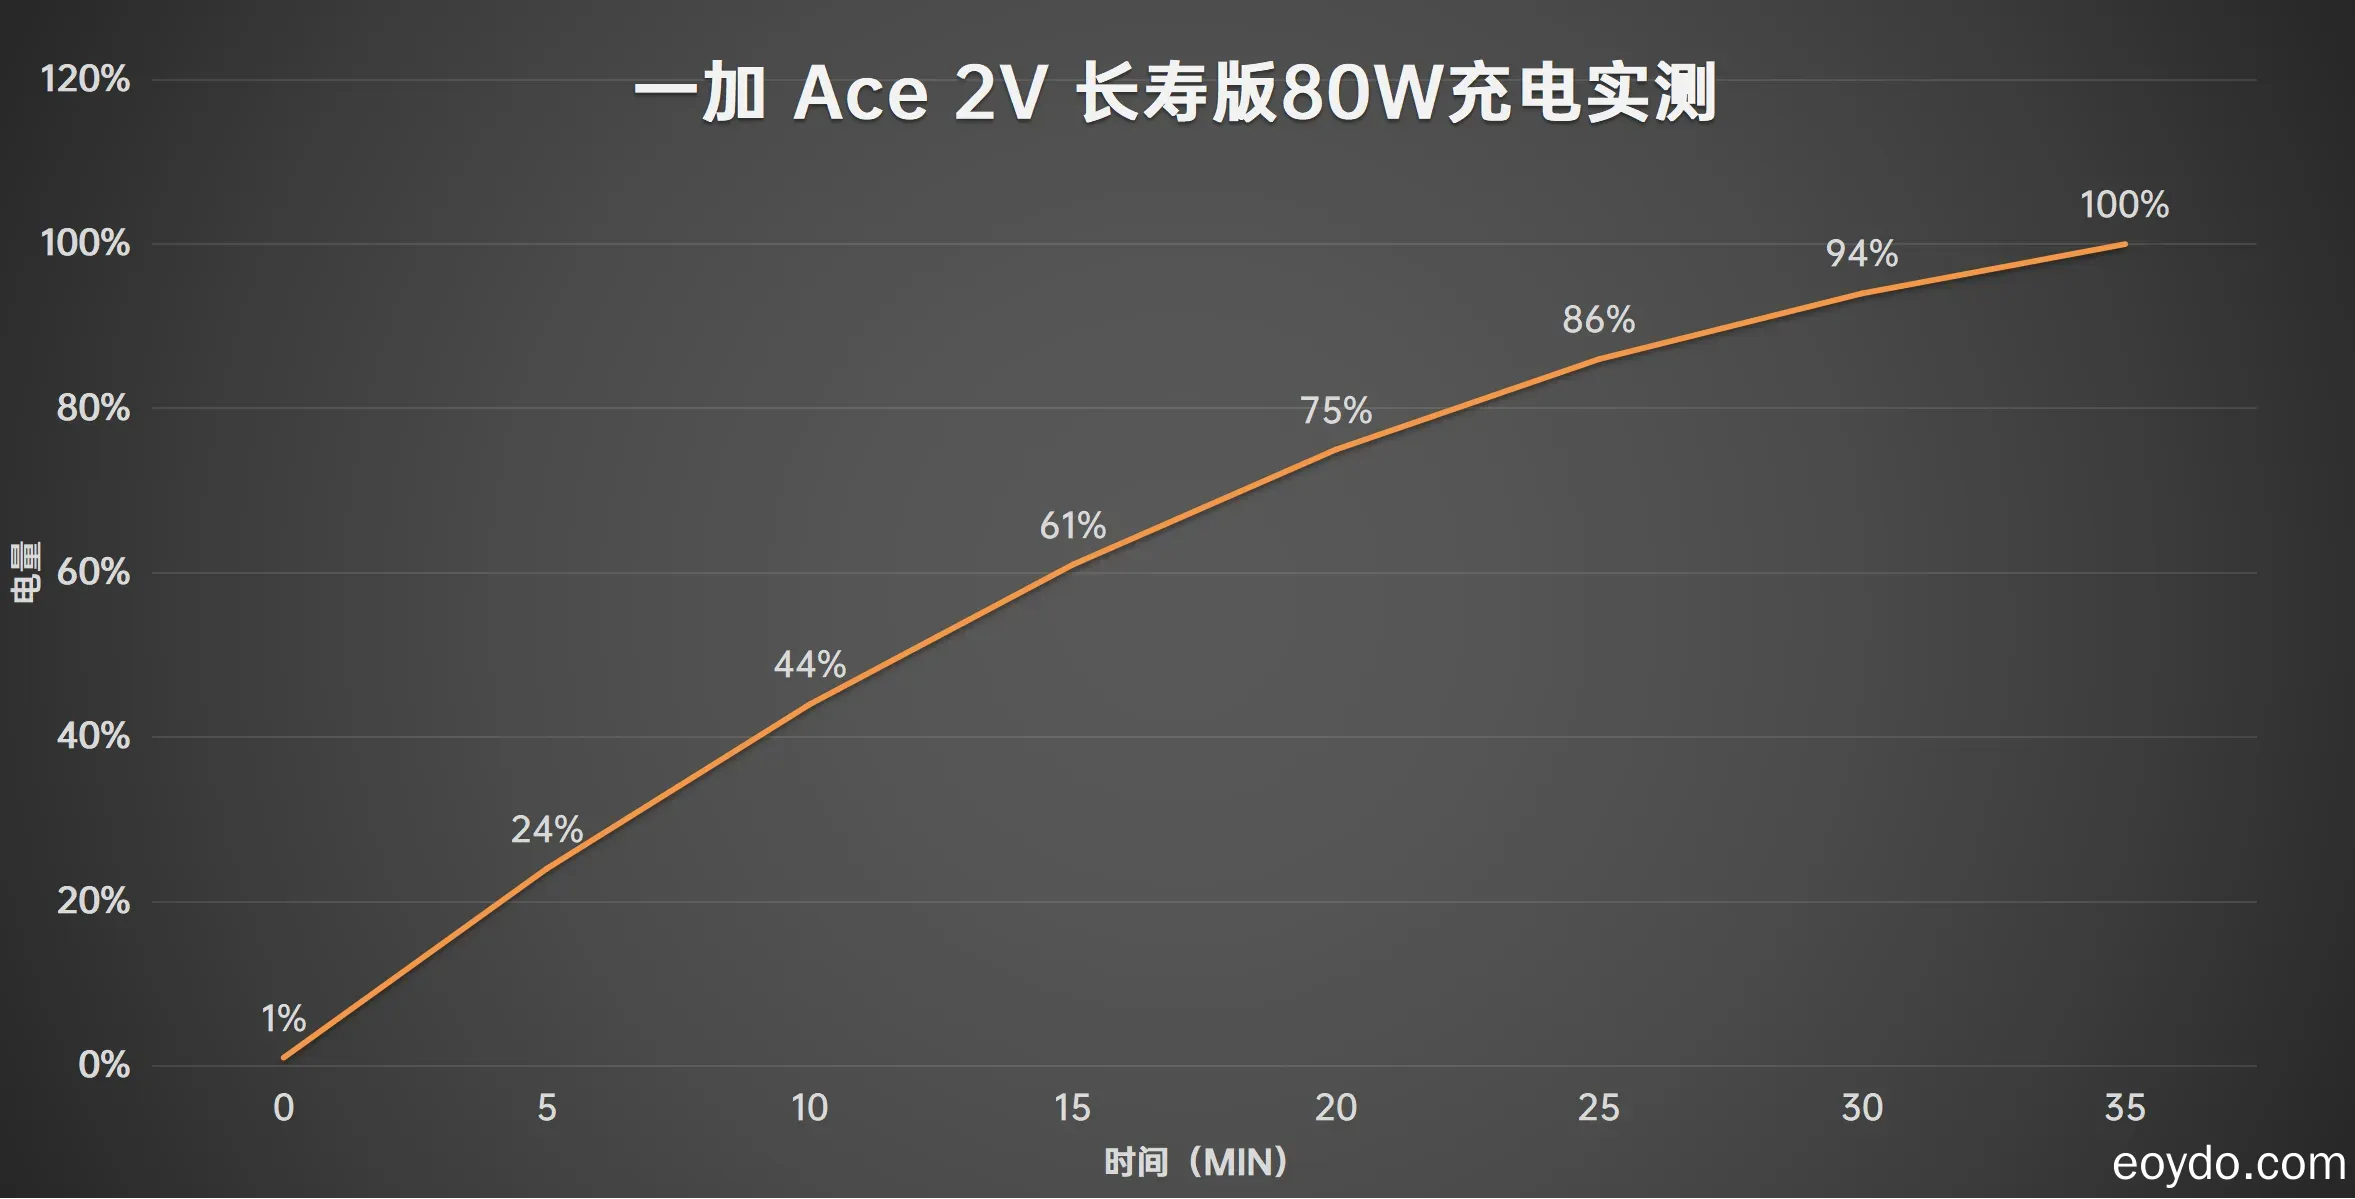 OnePlus Ace 2V im Test